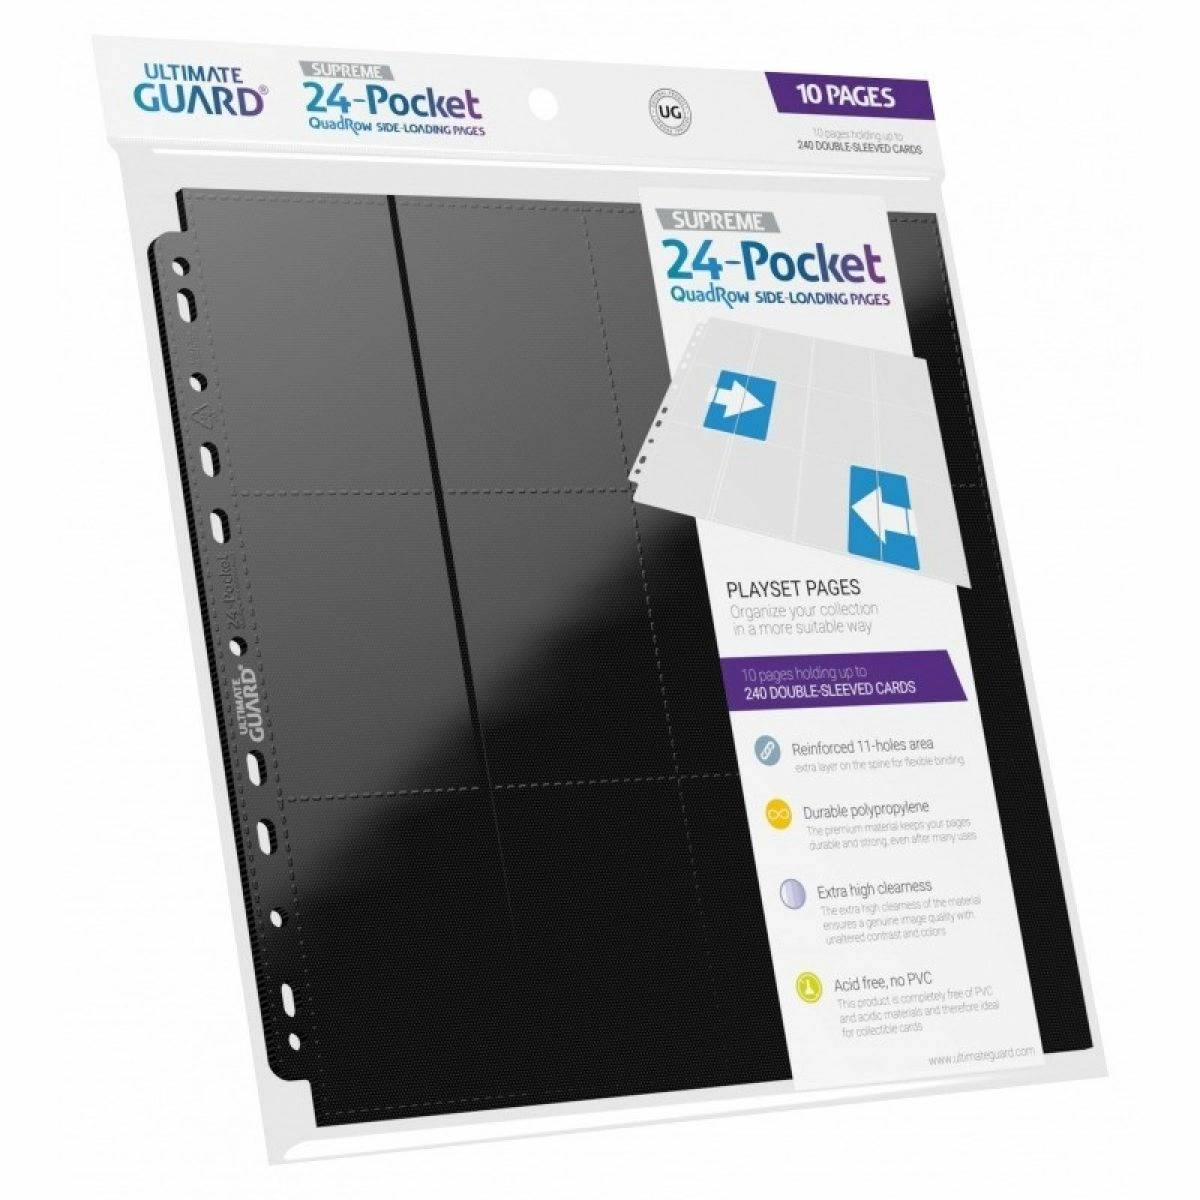 Ultimate Guard Folder 24 Pocket QuadRow Side-Loading Pages (10)